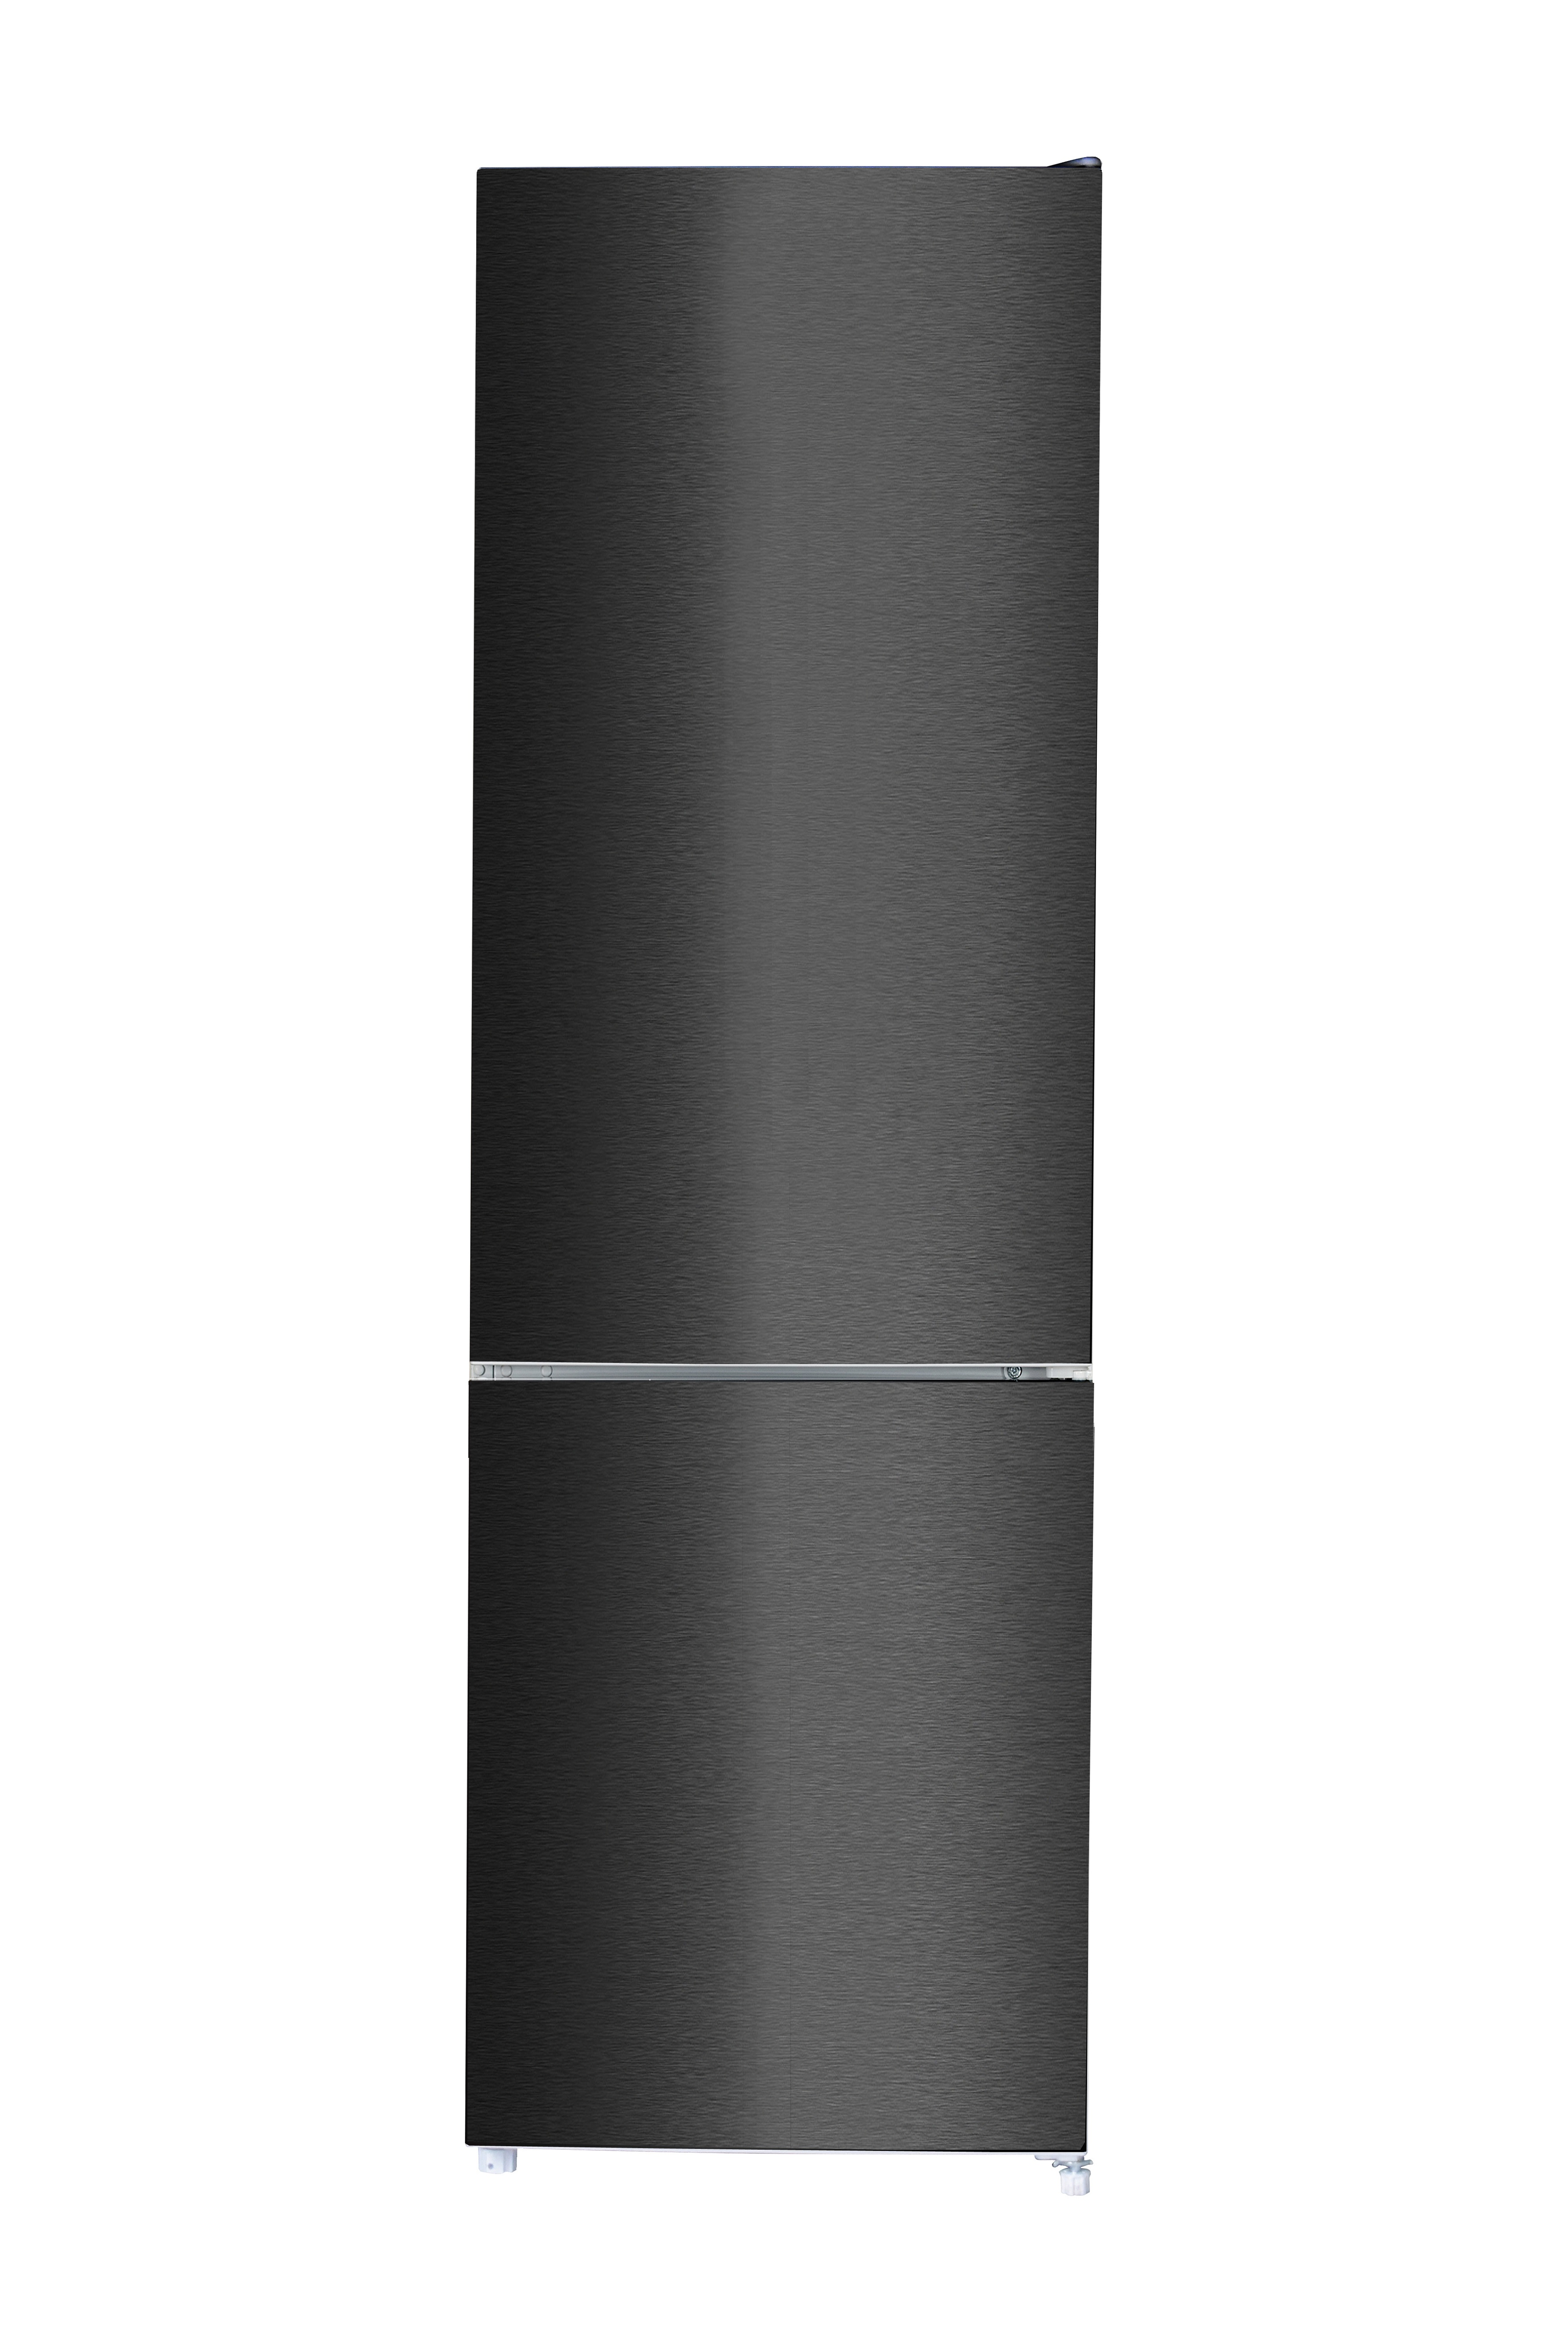 RESPEKTA KG176BS-37 Kühlschrank (D, 1760 mm hoch, Black Steel)